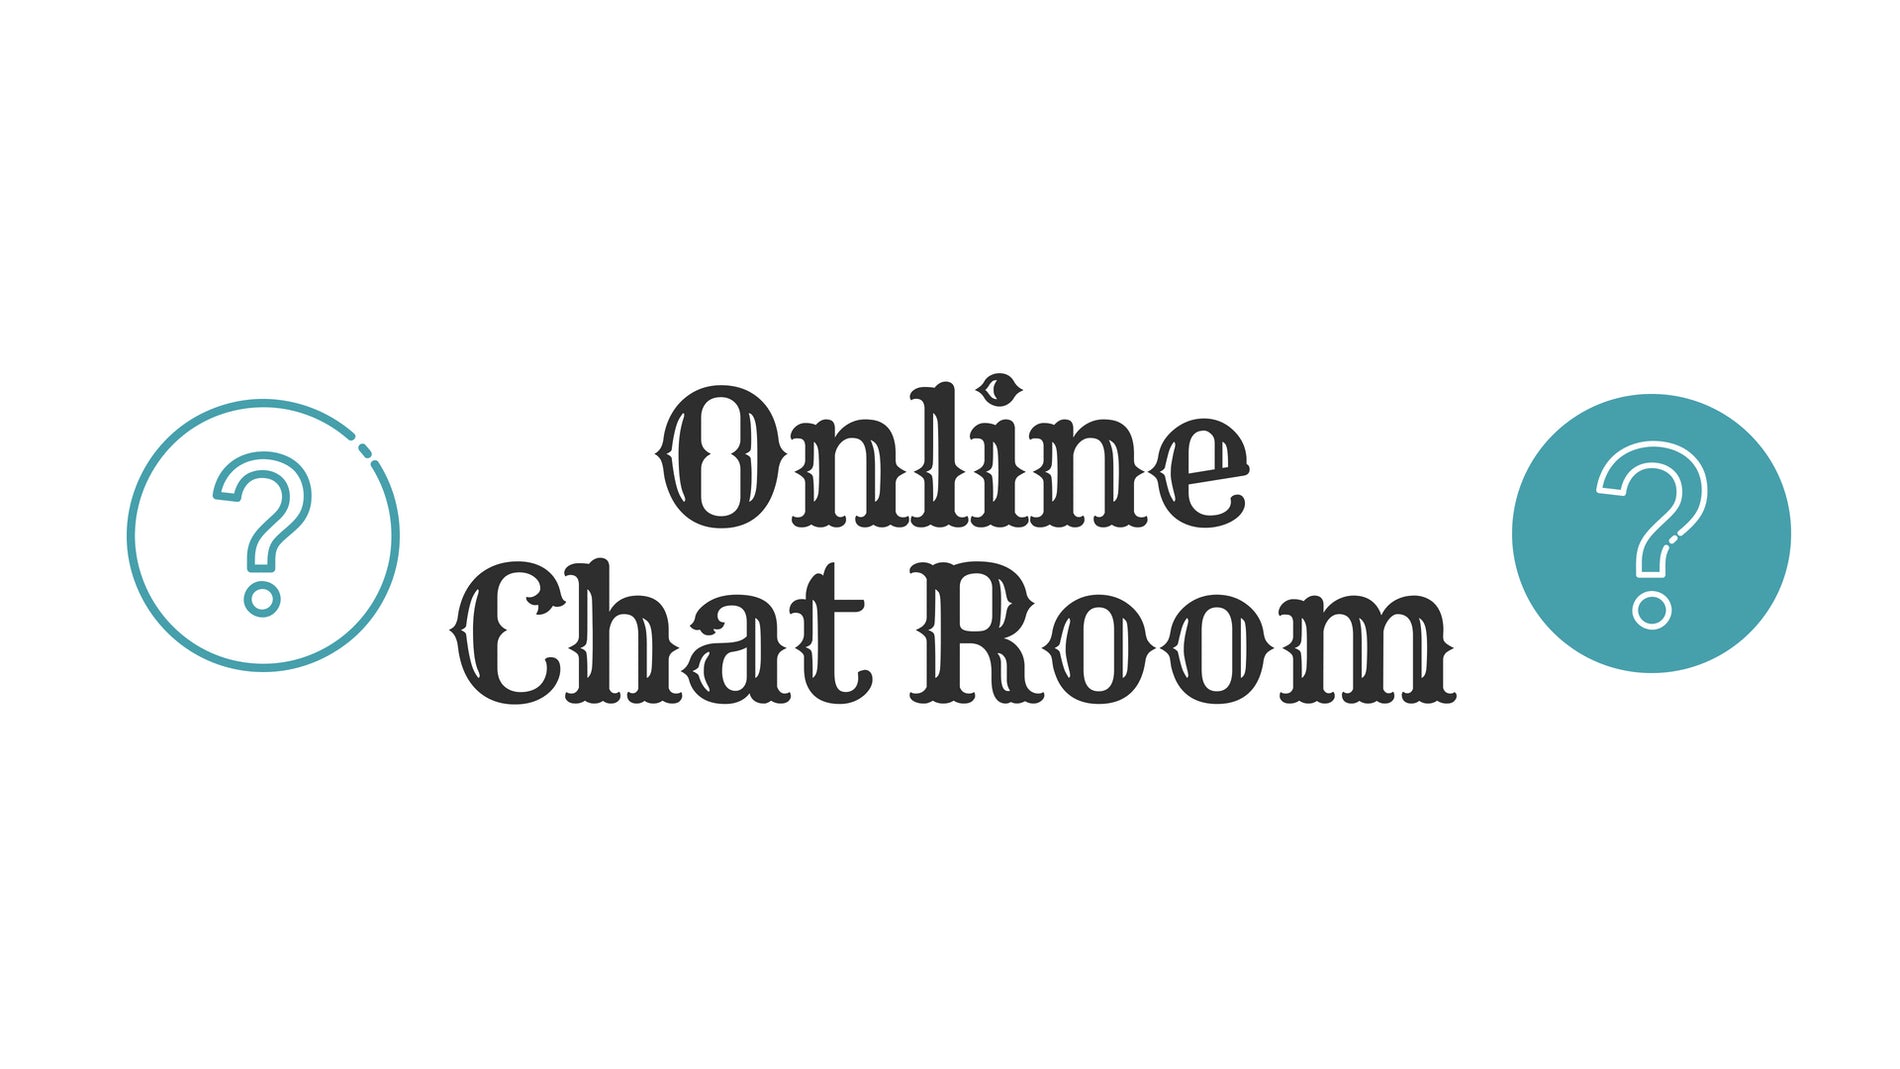 Is Live Chat Available For 24-Hours? / 线上聊天室是否24小时运作？/24시간 실시간 Live Chat 으로 연락가능한가요 ?